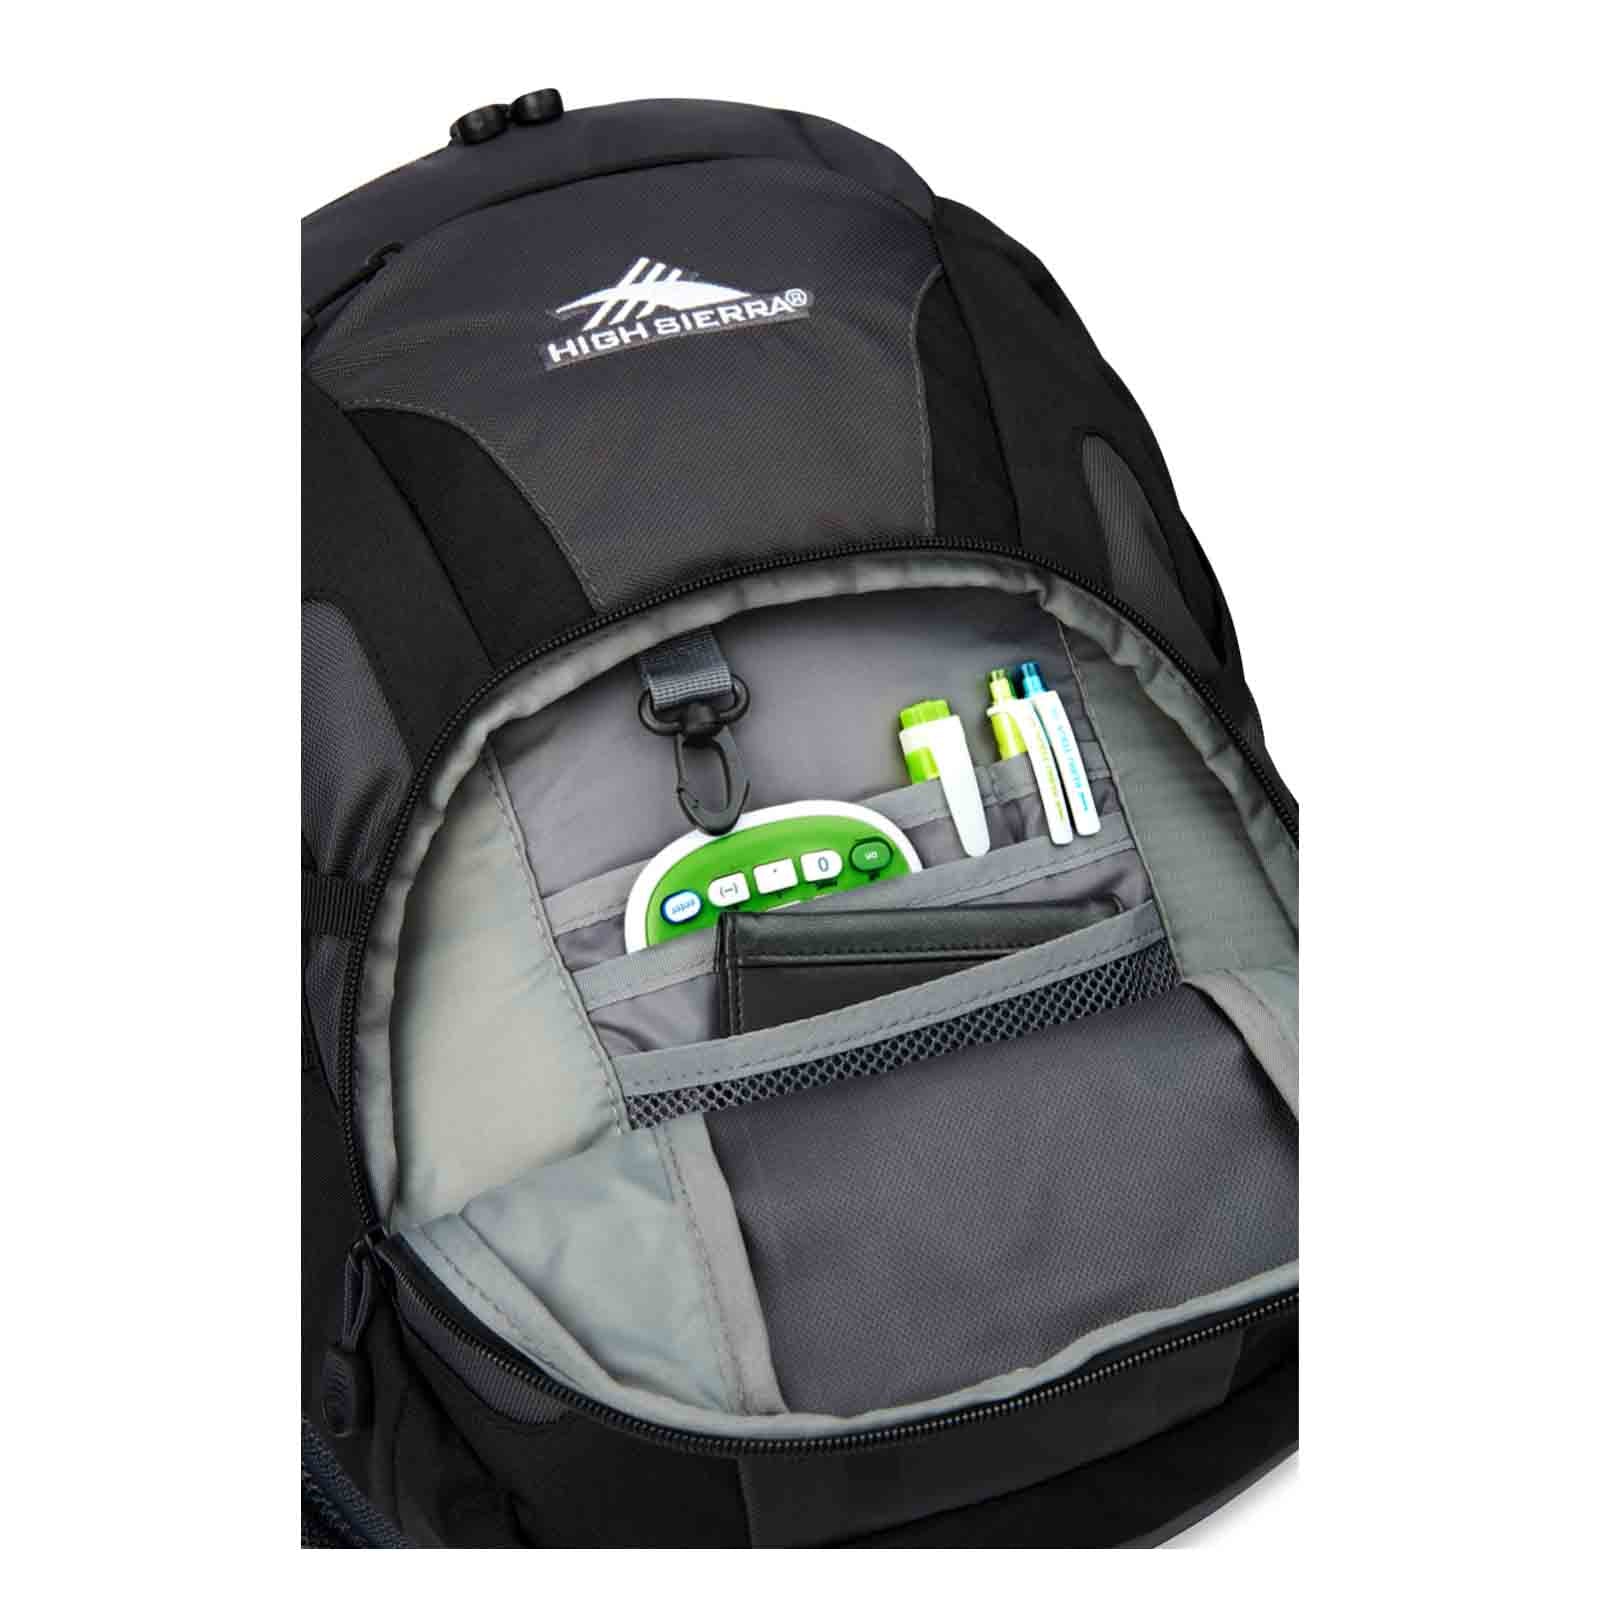    High-Sierra-Composite-Backpack-Charcoal-Pocket